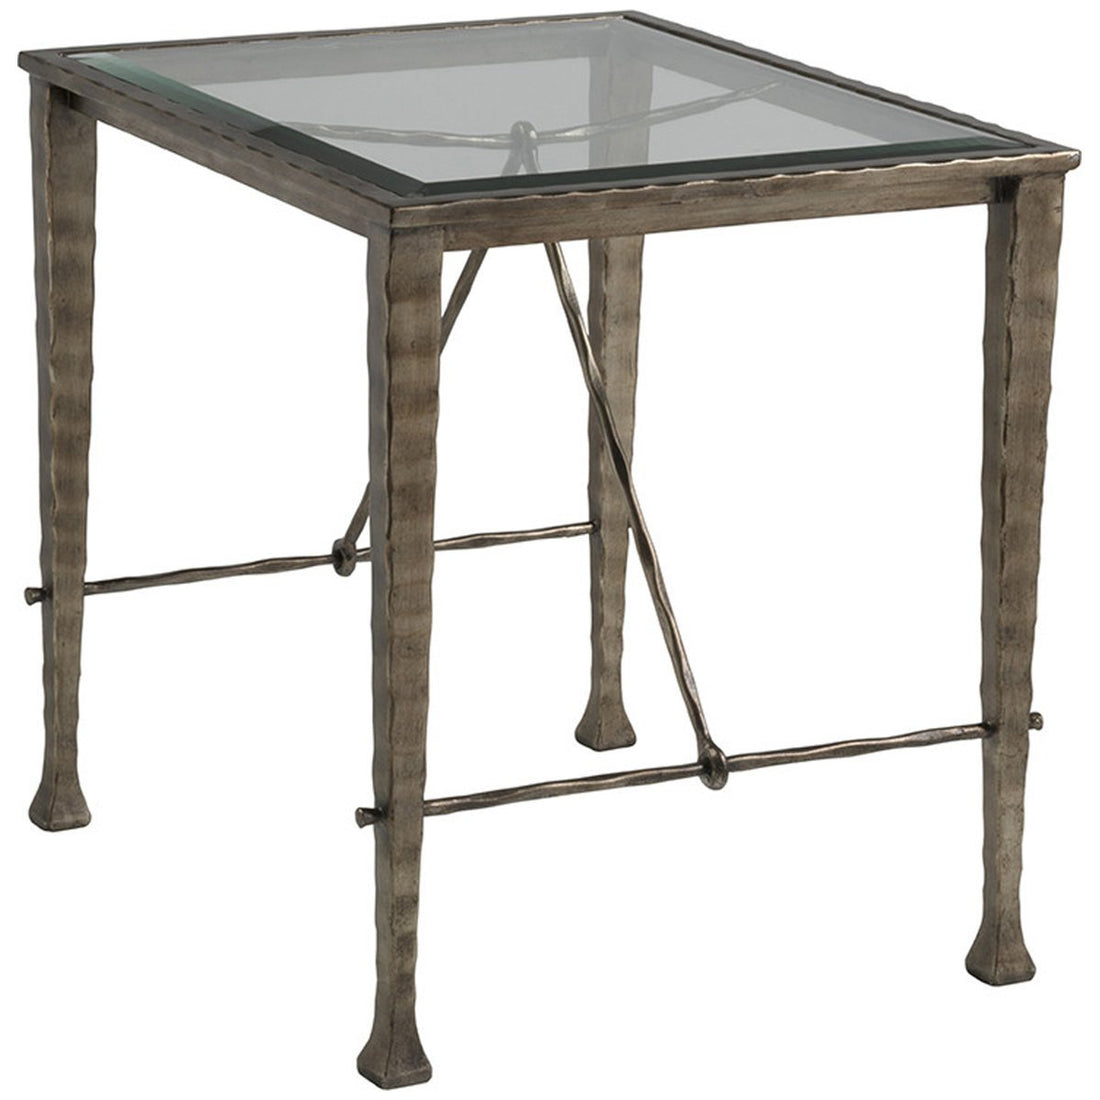 Artistica Home Cortona End Table with Glass Top 2129-955C